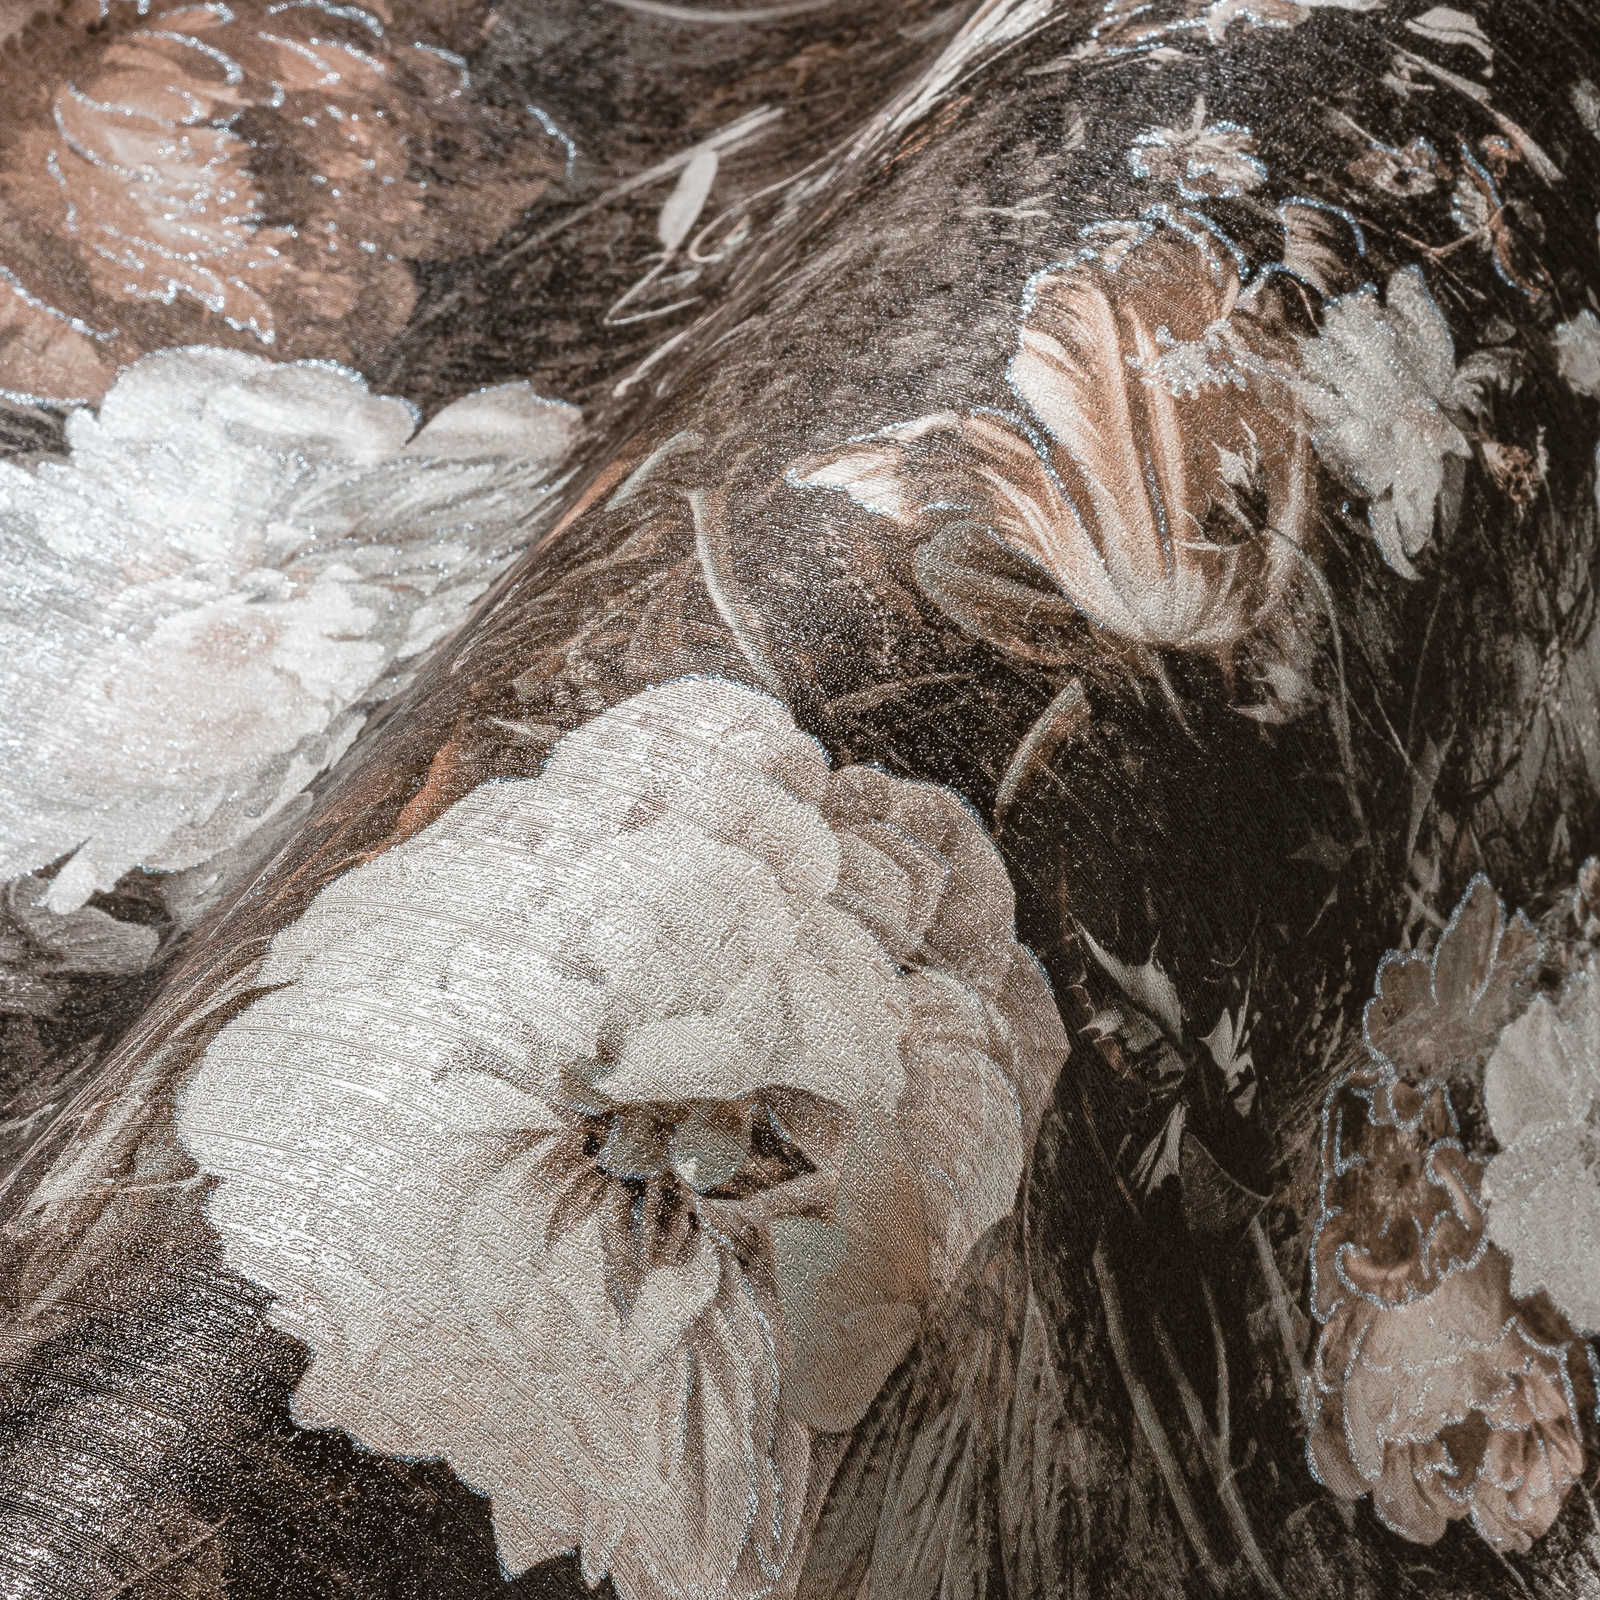             Vintage floral wallpaper classic rose pattern - cream, brown
        